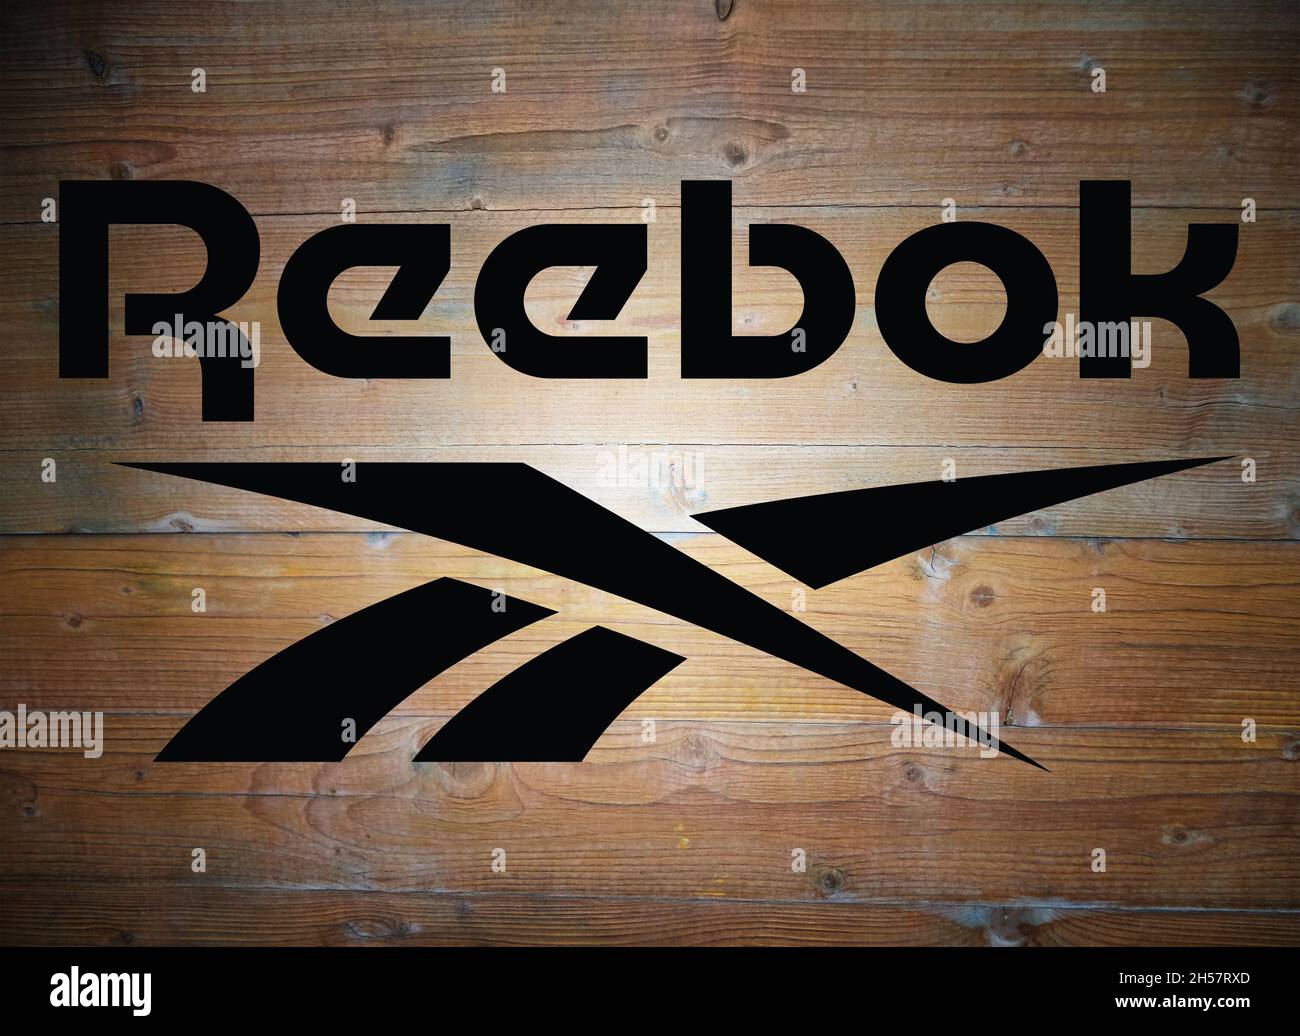 Reebok logo on wooden background Stock Photo - Alamy